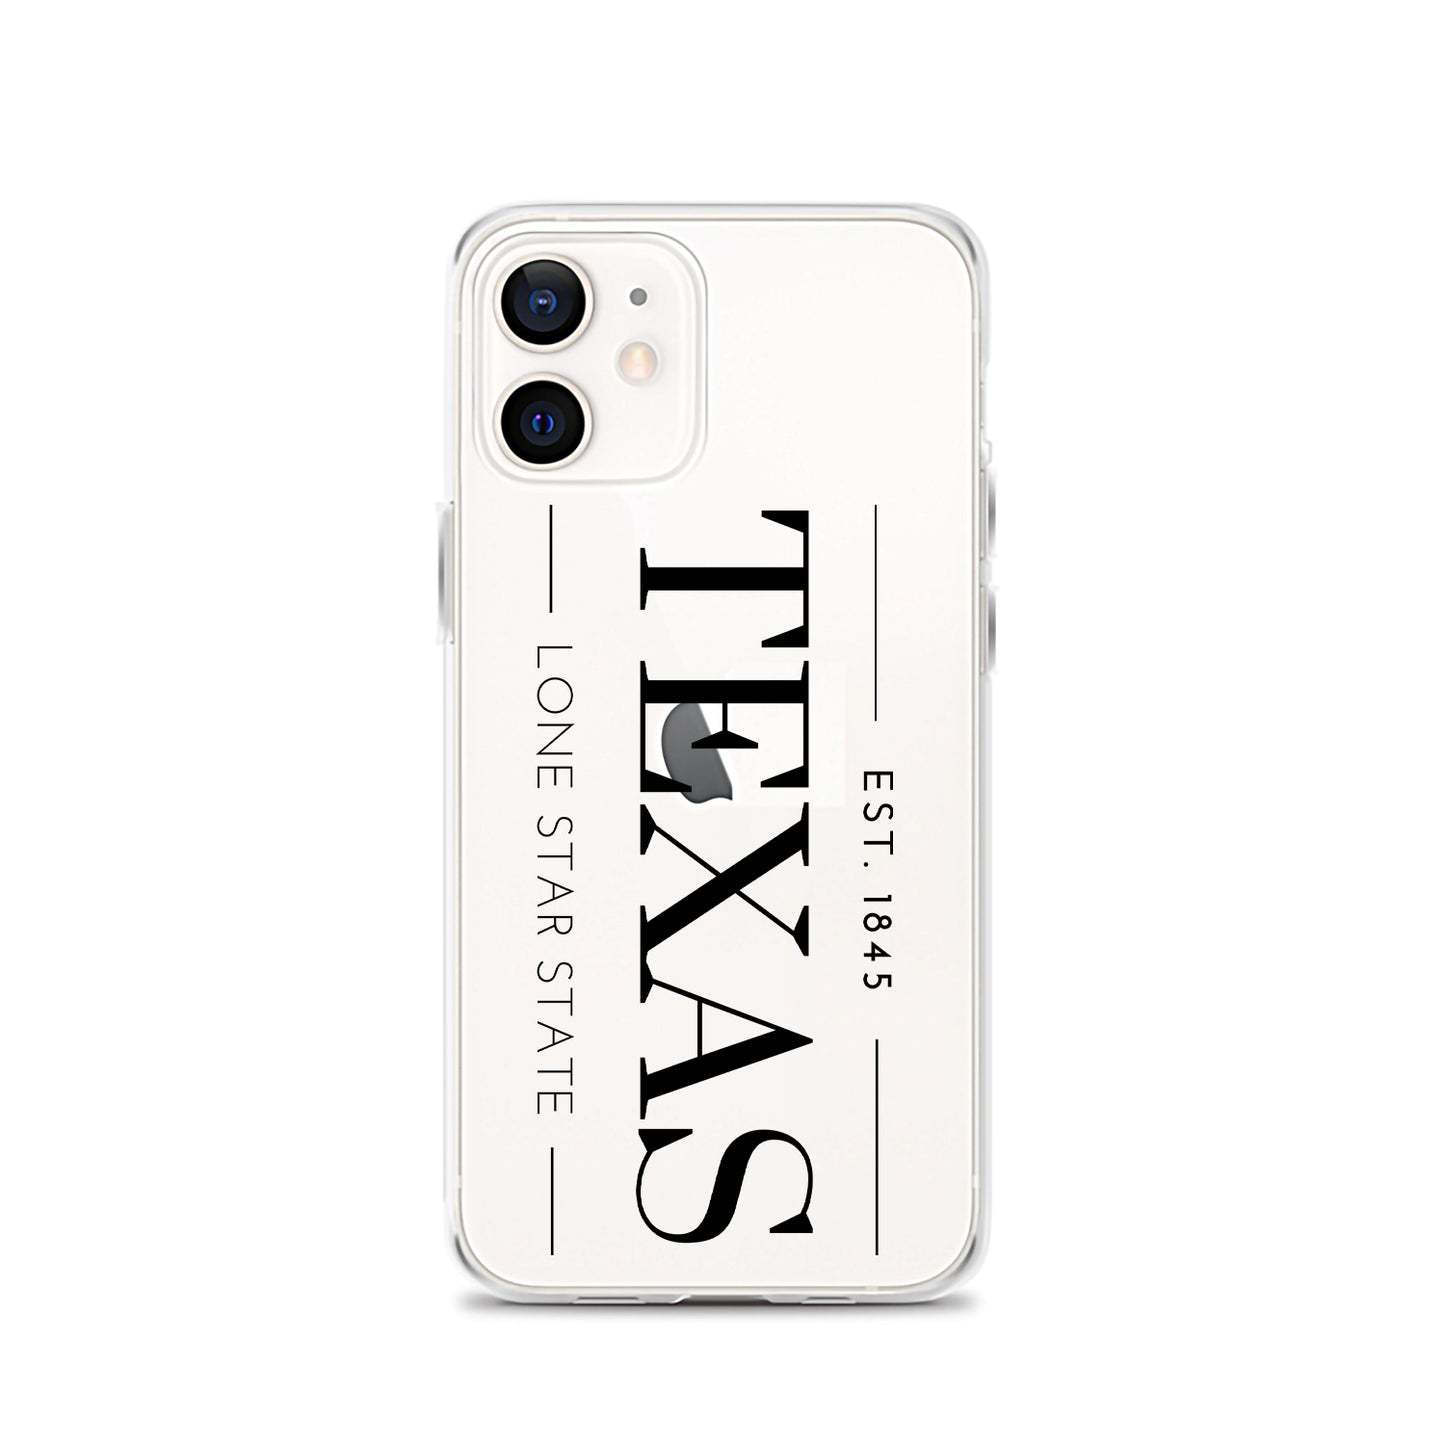 Texas iPhone Case, Clear Texas iPhone Case